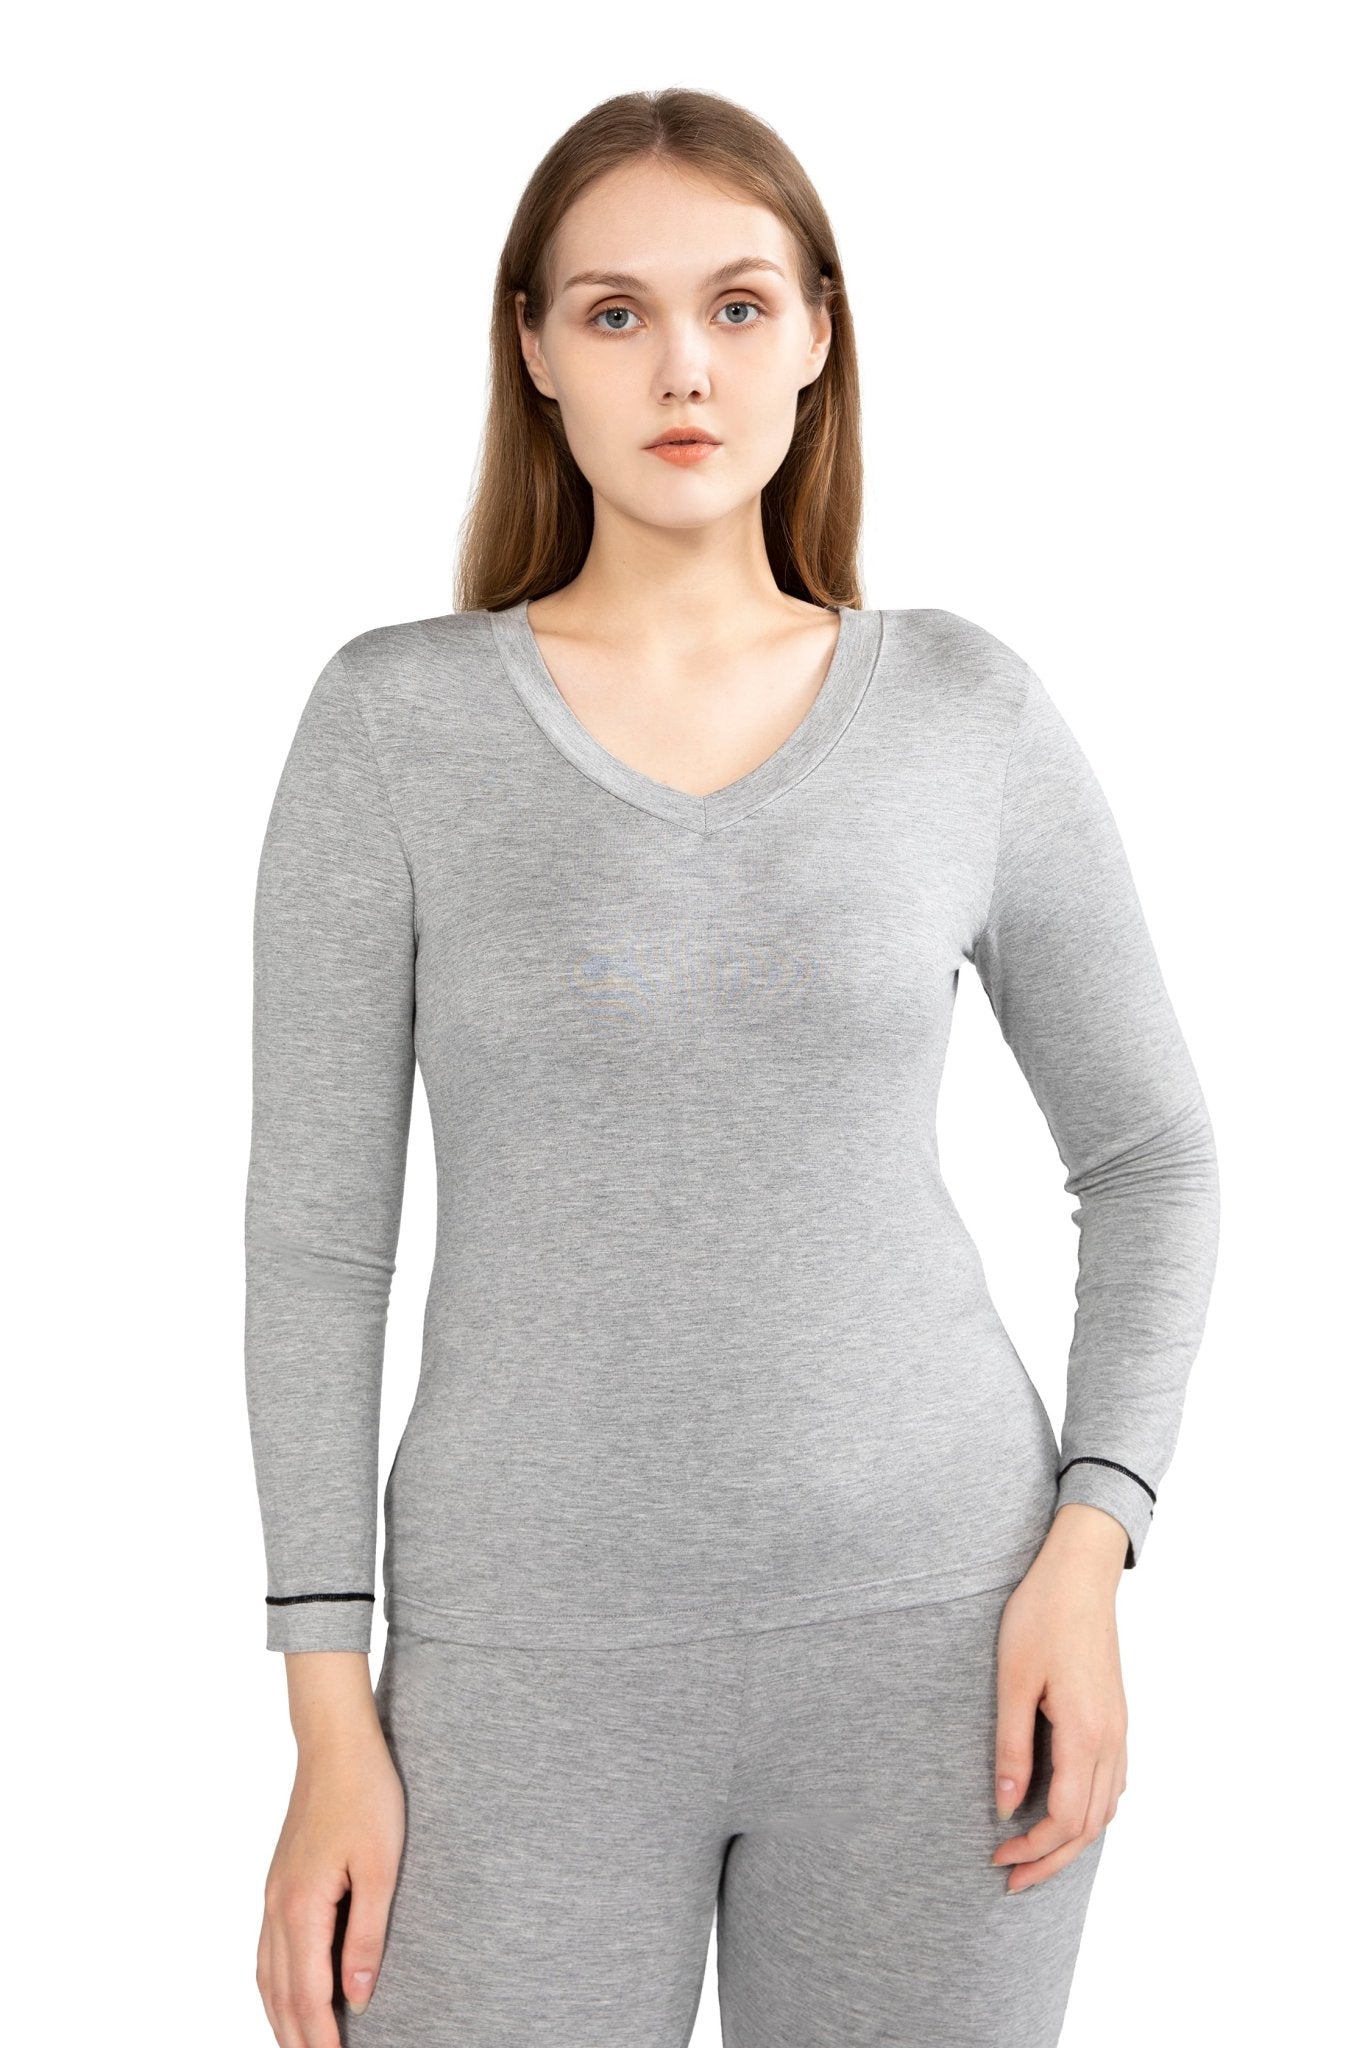 POSESHE Women's Plus Size V-Neck Short Sleeve Bodysuit, S-5XL 